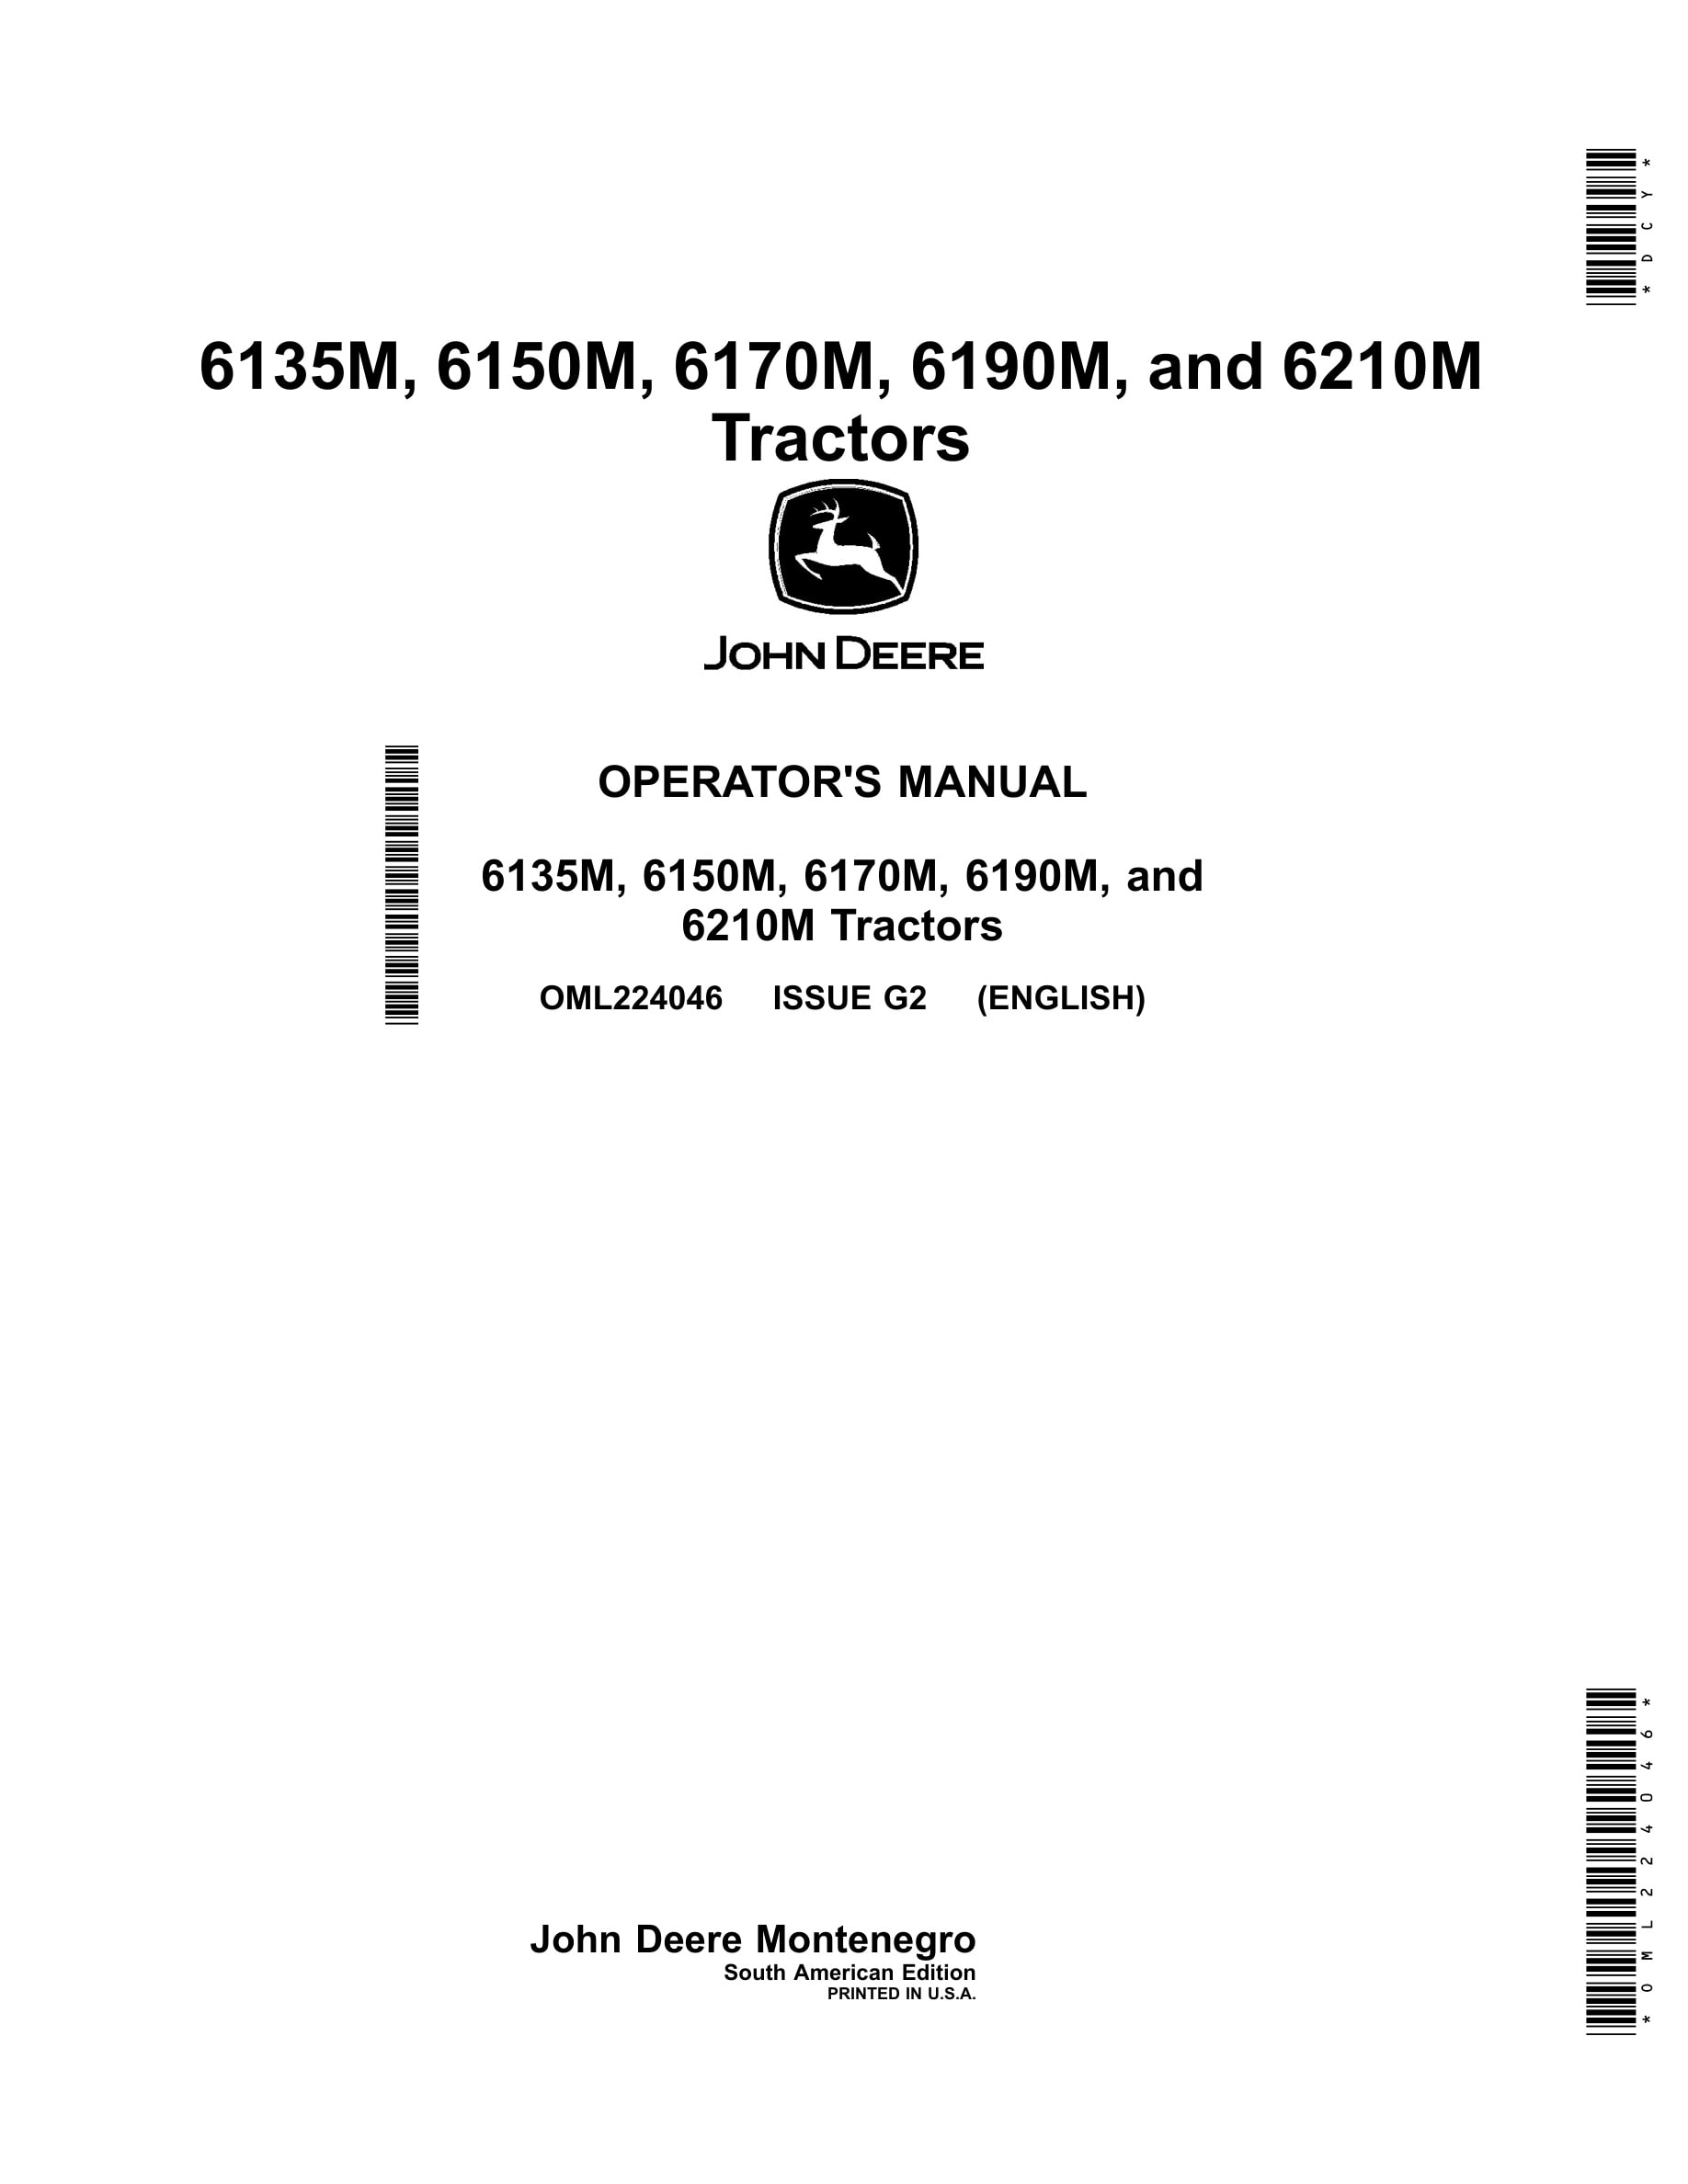 John Deere 6135m, 6150m, 6170m, 6190m, And 6210m Tractors Operator Manuals OML224046-1